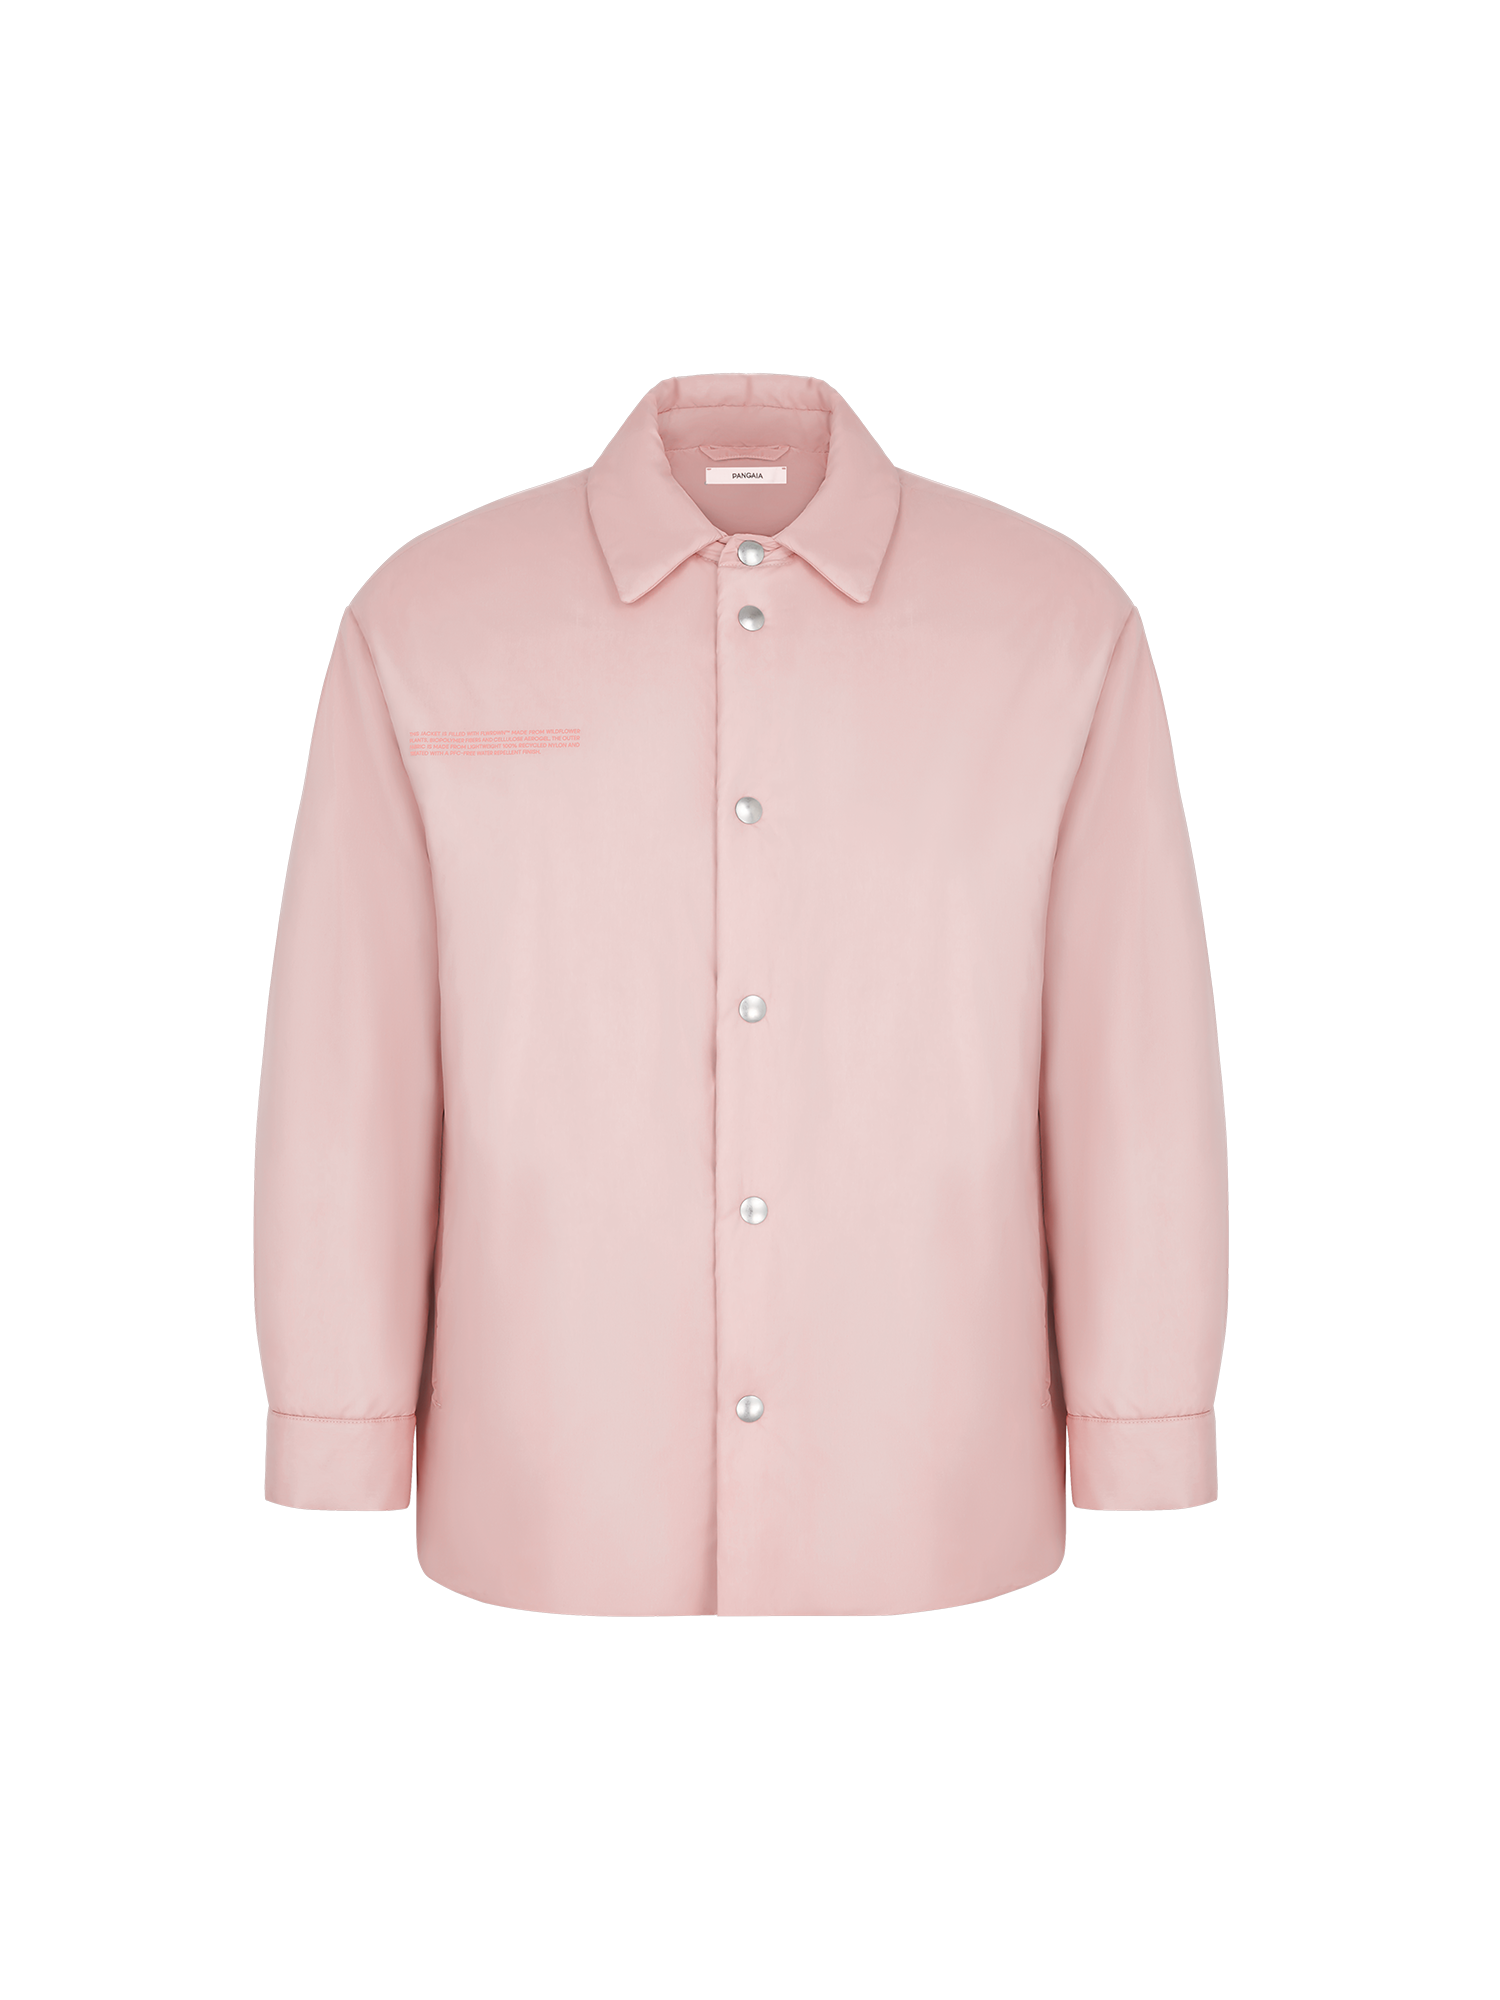 FLWRFLL_Unisex_Shirt_Magnolia_Pink-packshot-2